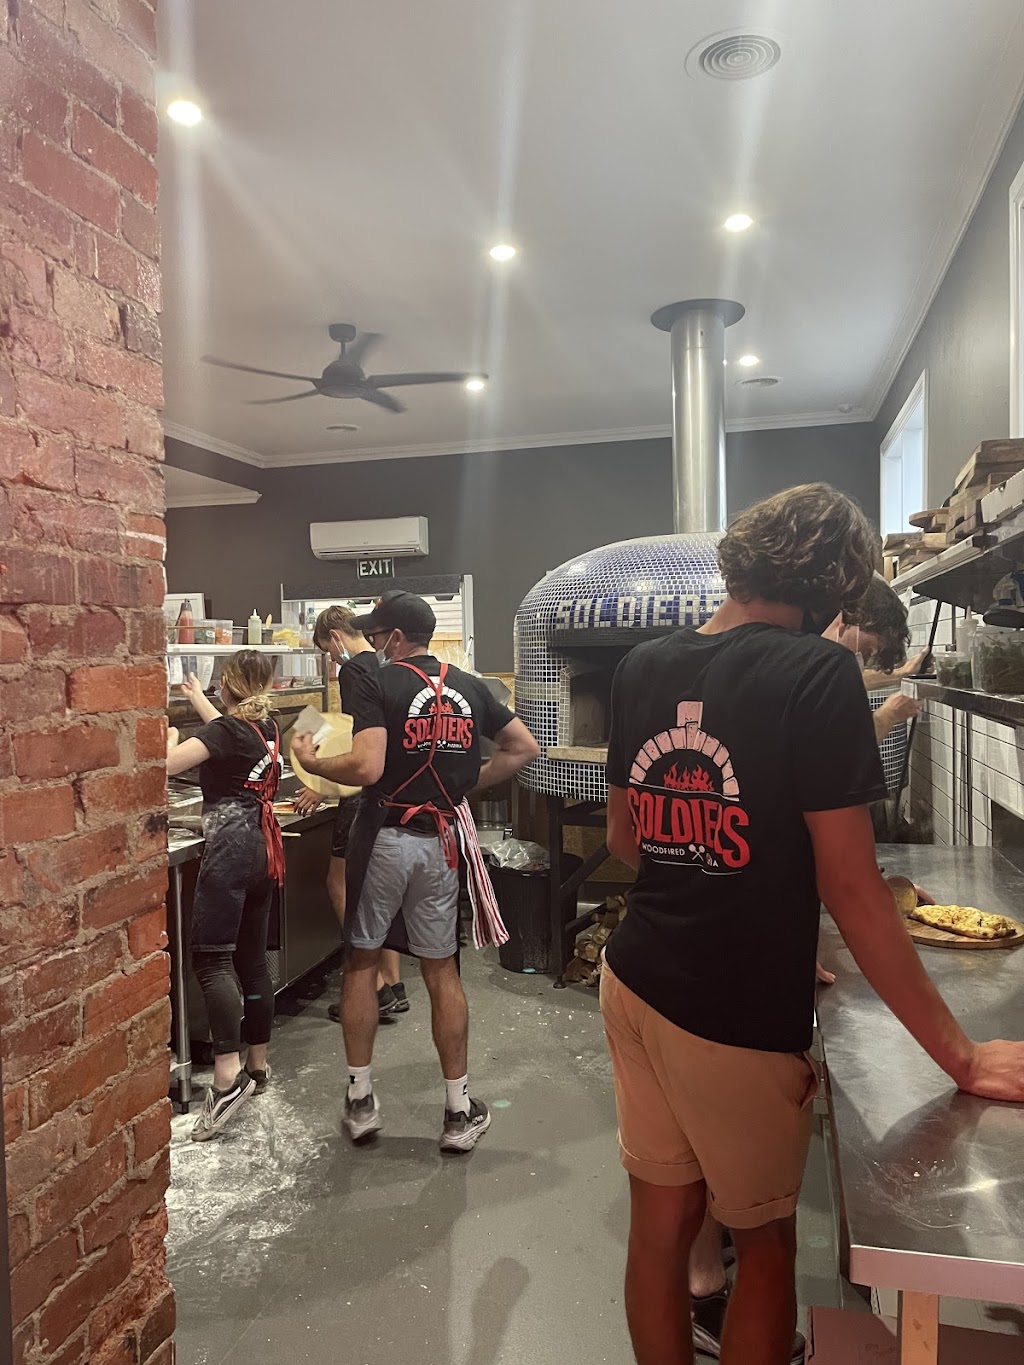 Soldiers Woodfired Pizzeria Ballarat | restaurant | 451 Doveton St N, Soldiers Hill VIC 3350, Australia | 0353333796 OR +61 3 5333 3796